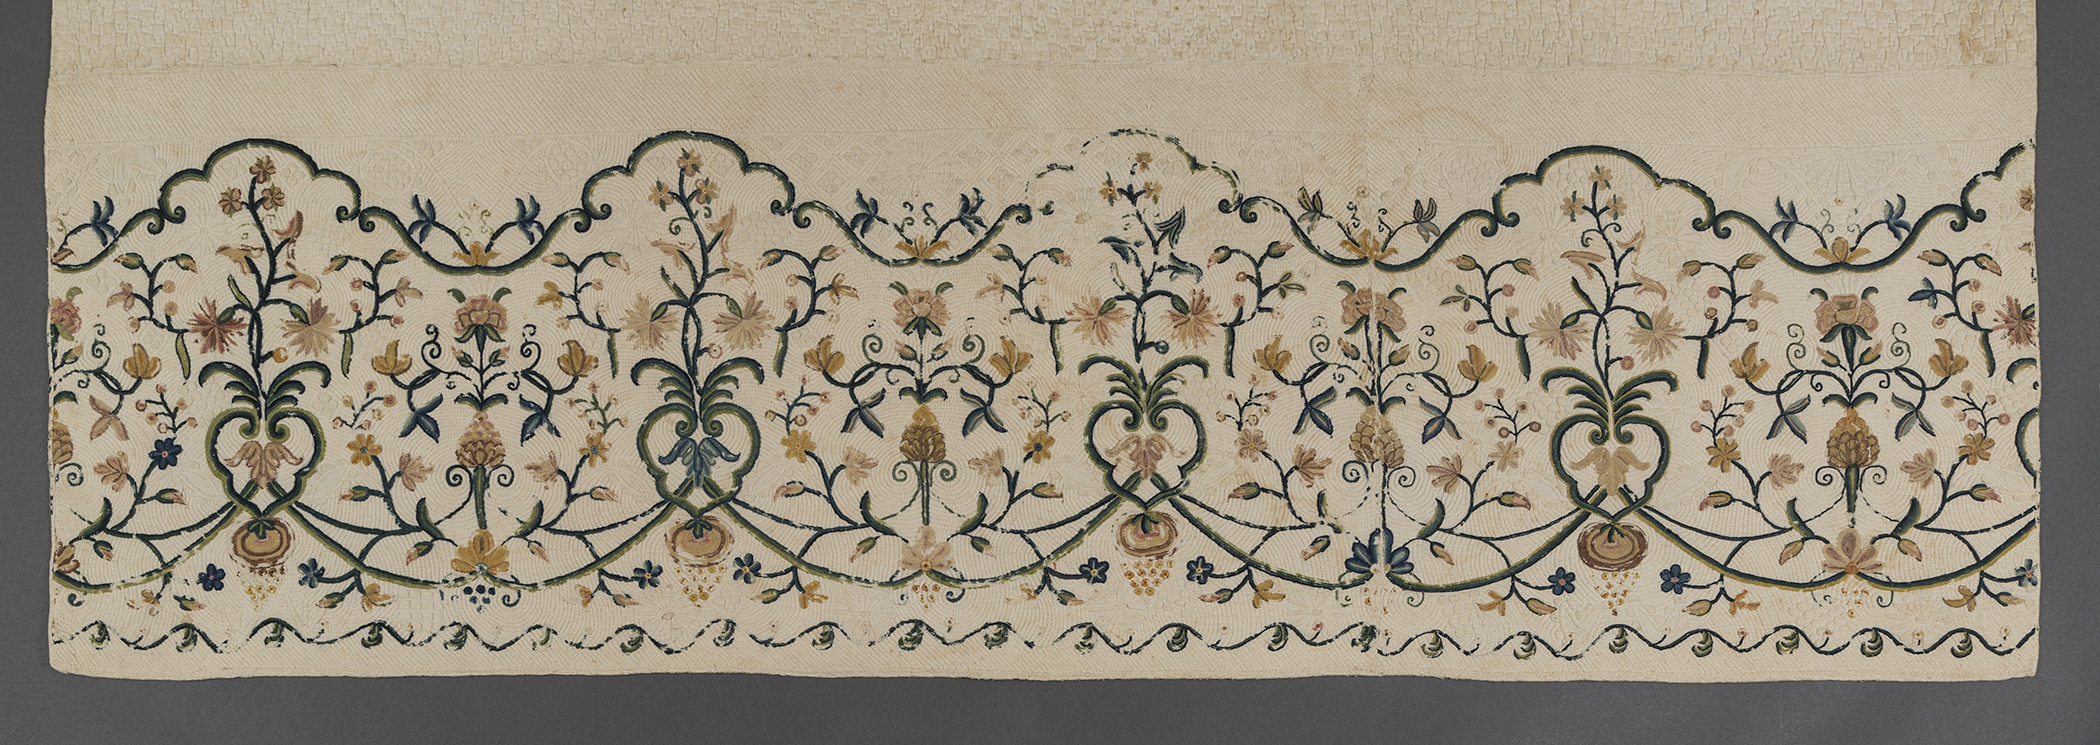 Textiles (Clothing) - Petticoat fragment